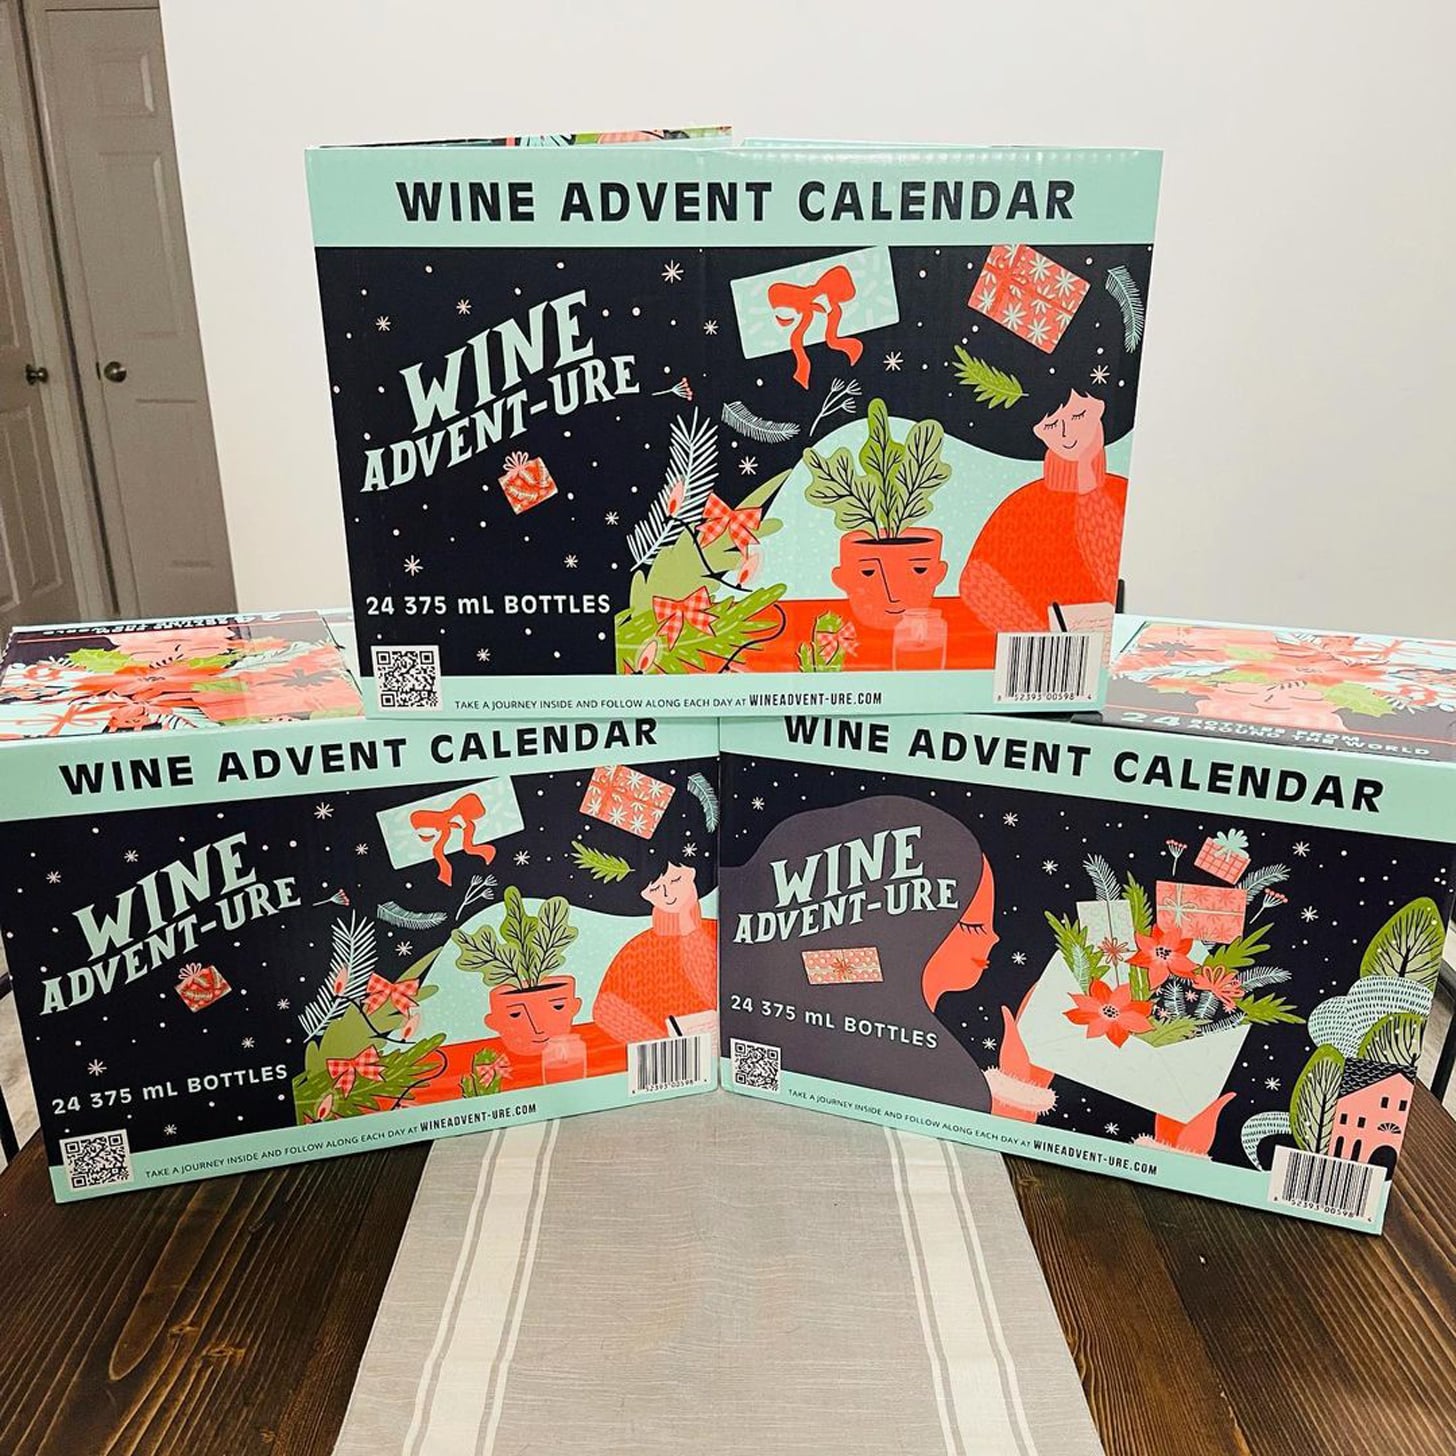 costco wine advent calendar 2021 release date